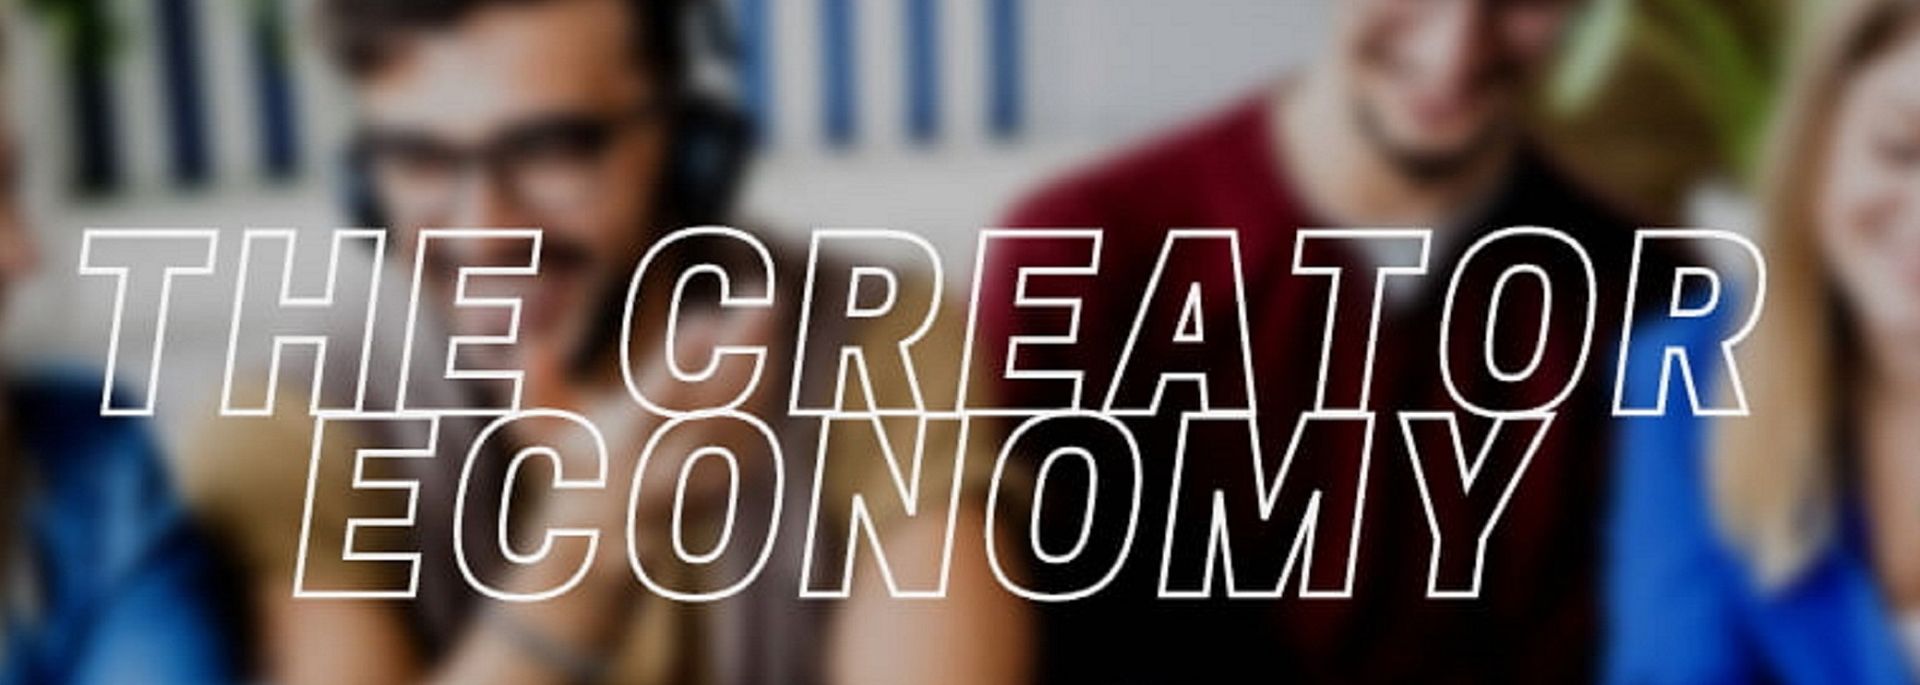 Creator Economy News channel